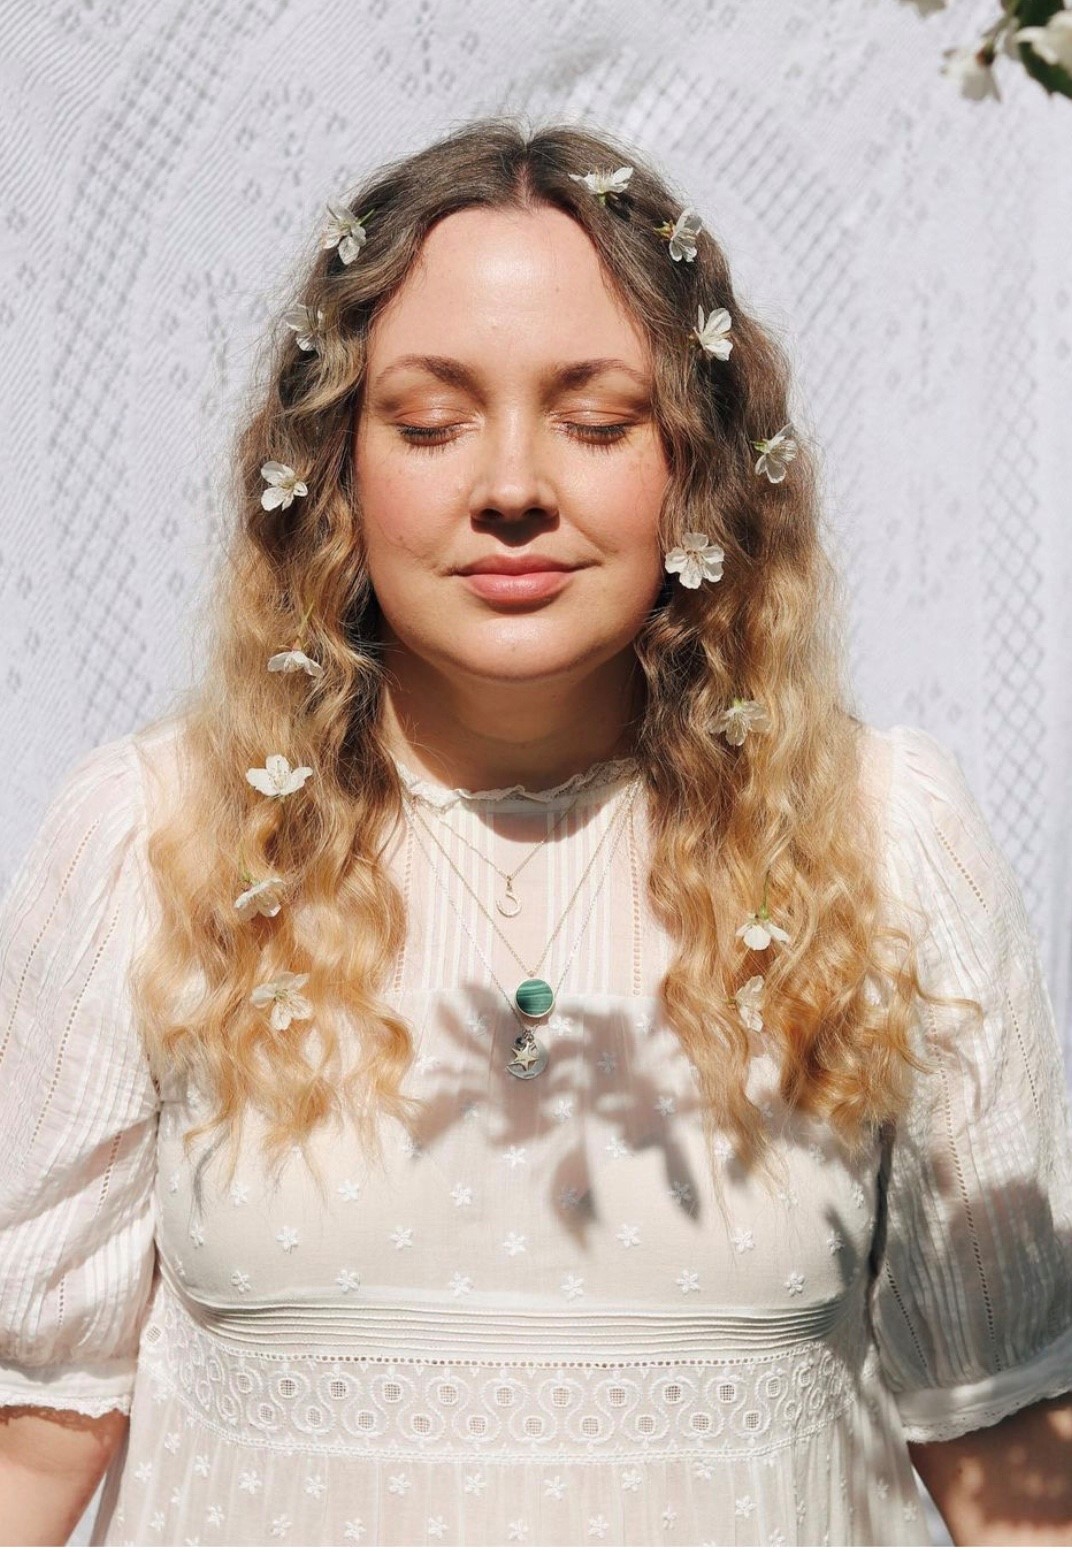 Wedding guest hair accessories: